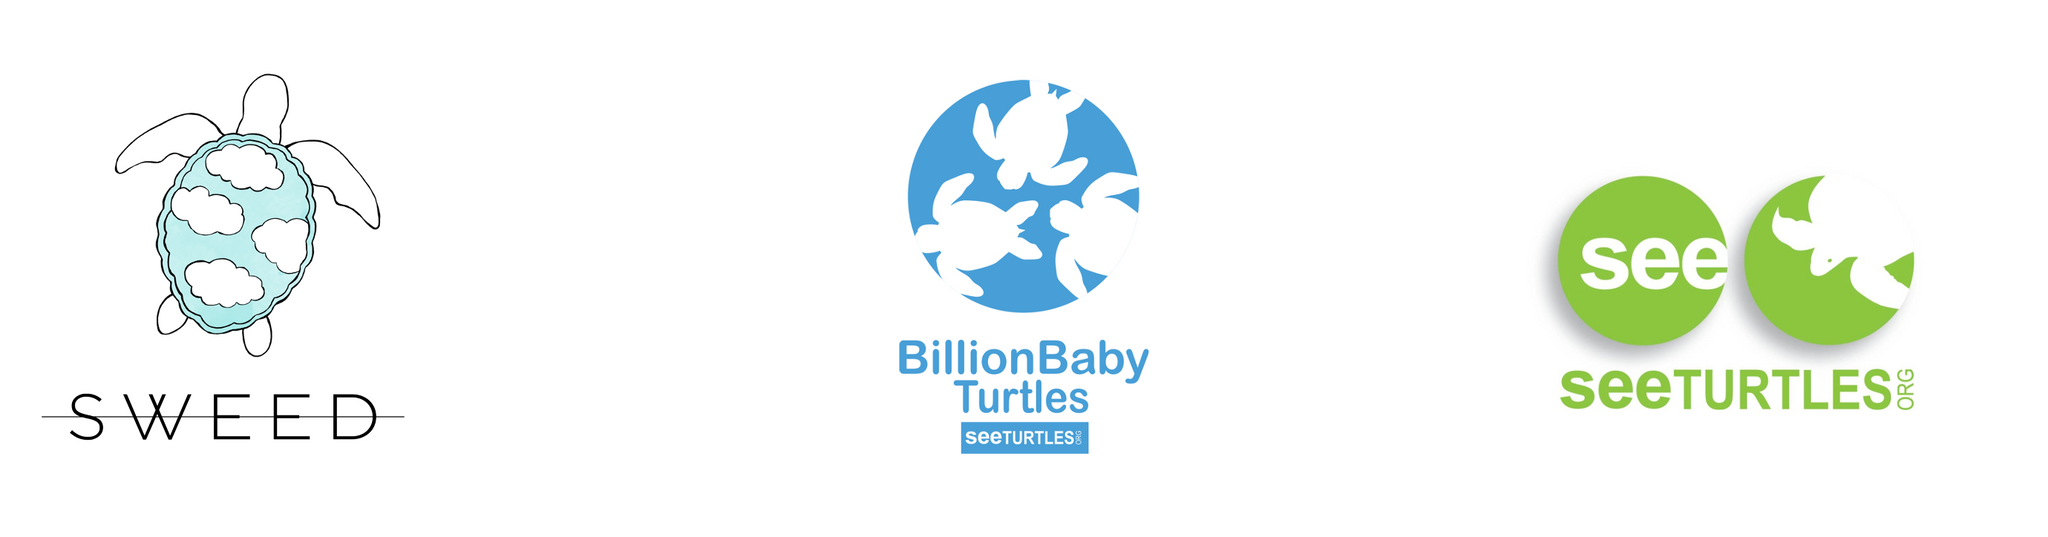 Sweed x Billion Baby Turtles – SWEED INT